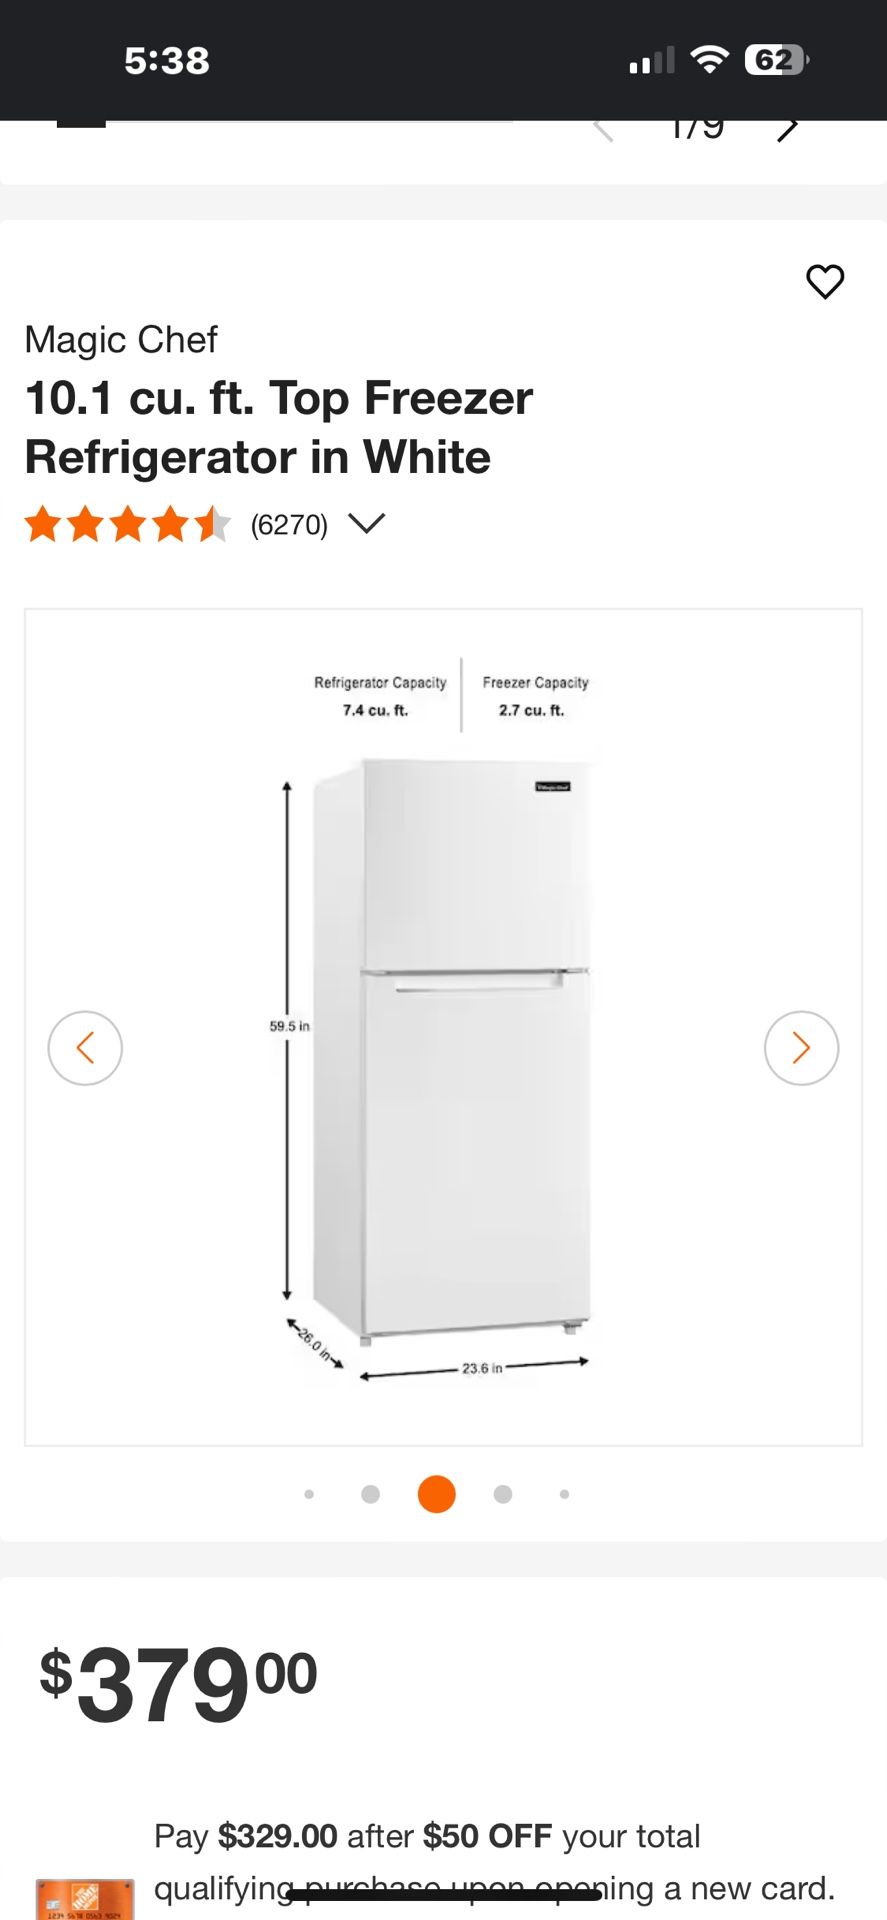 Magic Chef Top Freezer/Refrigerator